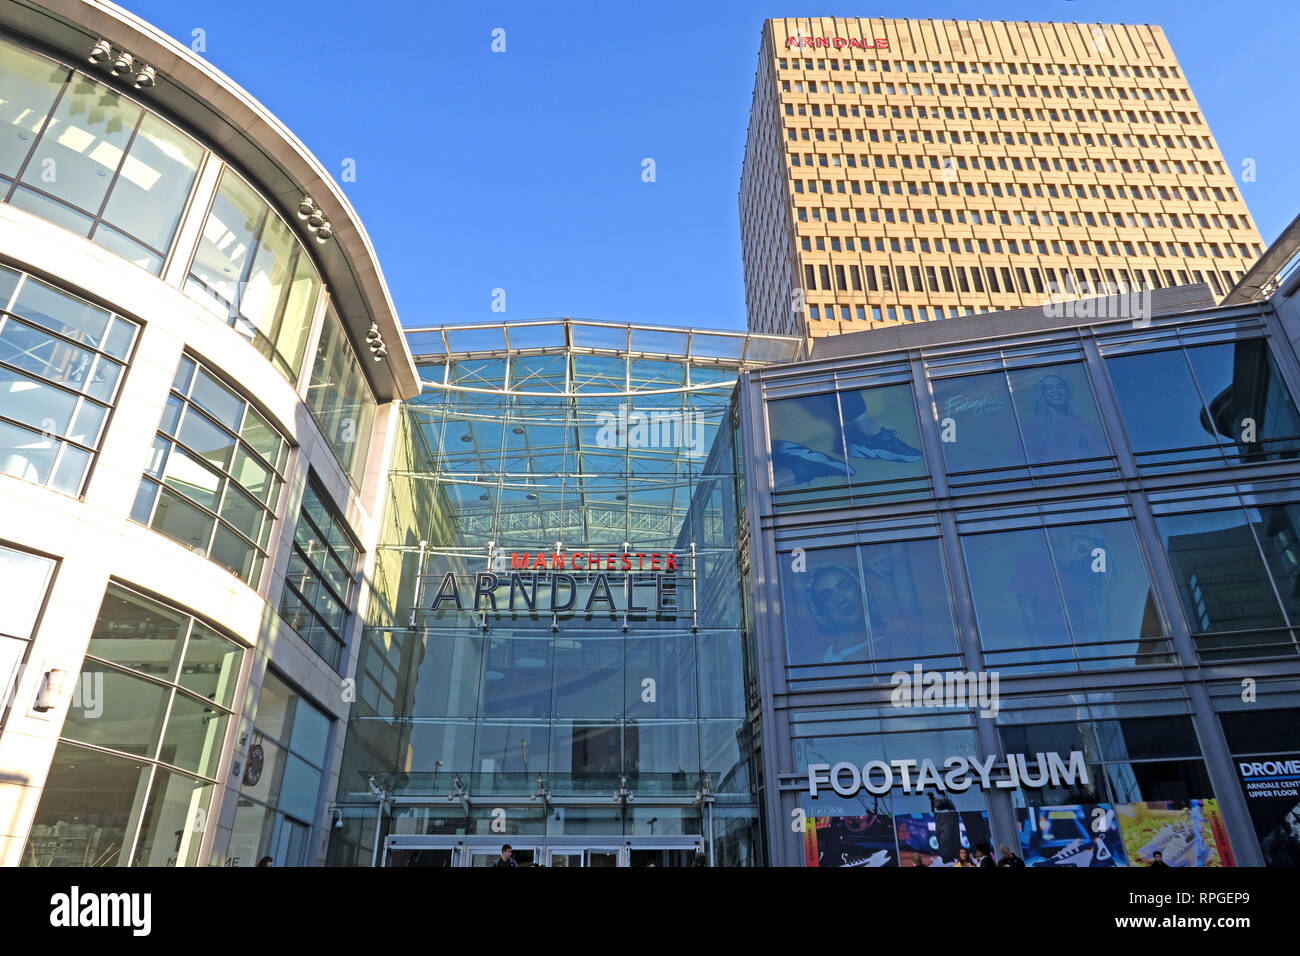 Manchester Arndale Shopping Centre, Exchange Square entrance / High St, Manchester City Centre, North West England, UK, M3 1BD Banque D'Images